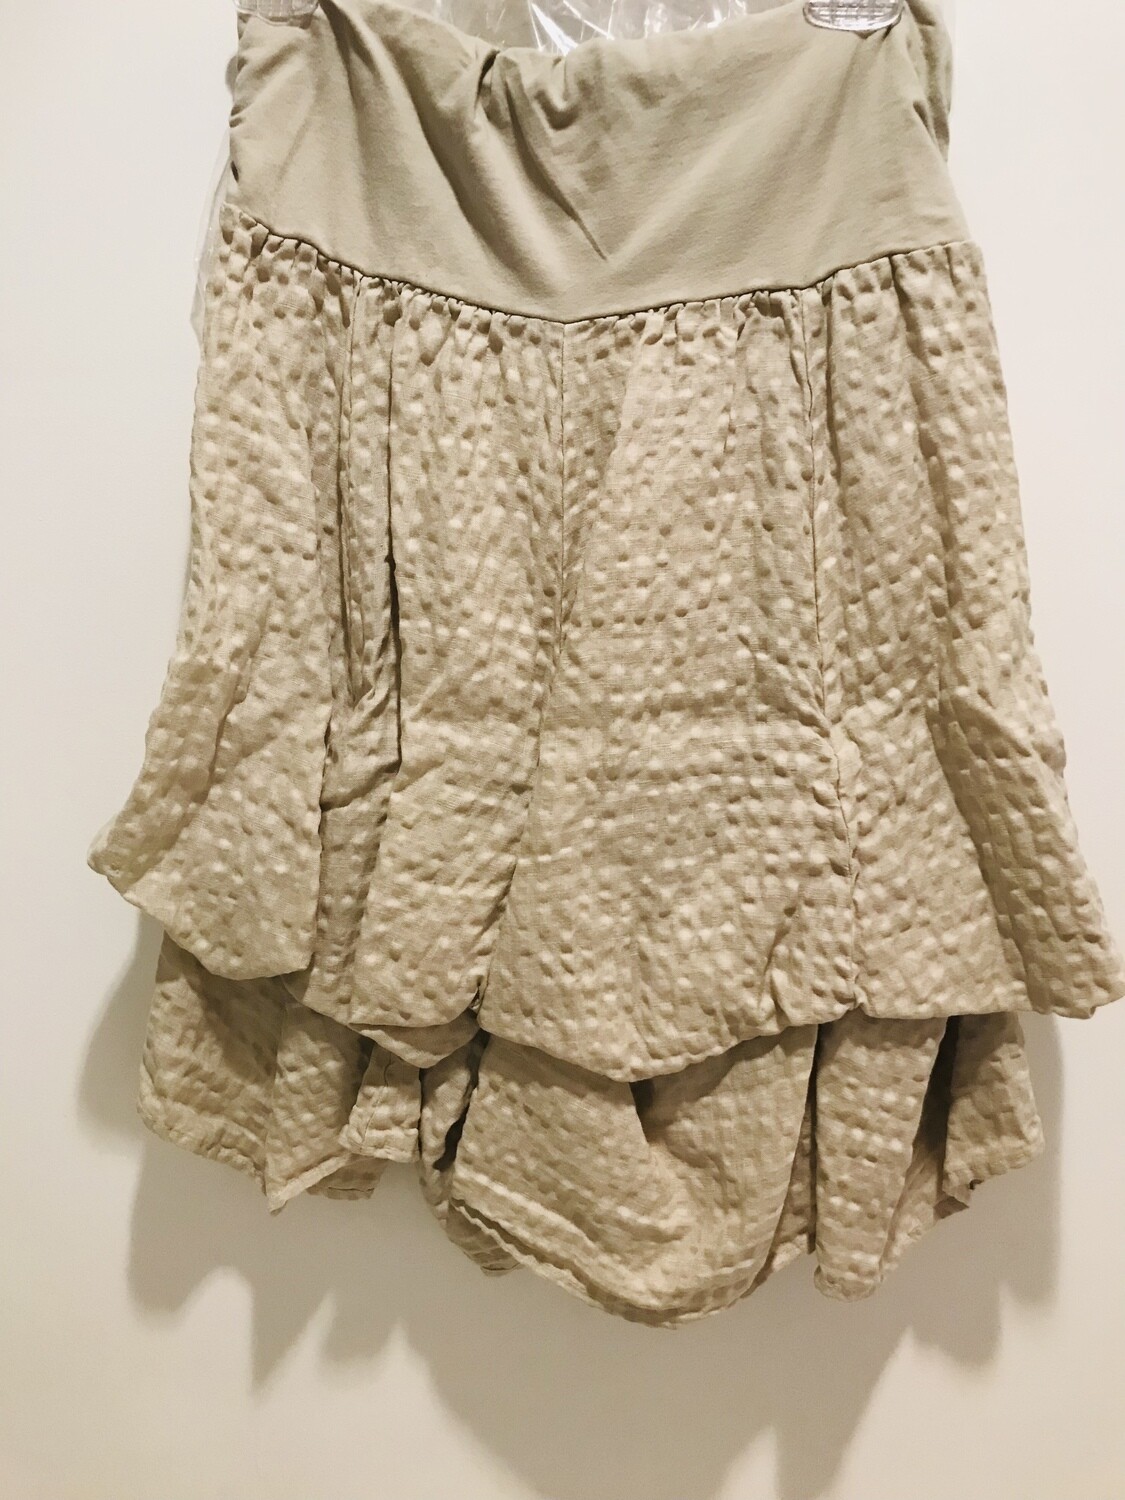 Luna Luz: Tied & Dyed Seersucker Cotton Skirt (In Khaki, Ships Immed!)